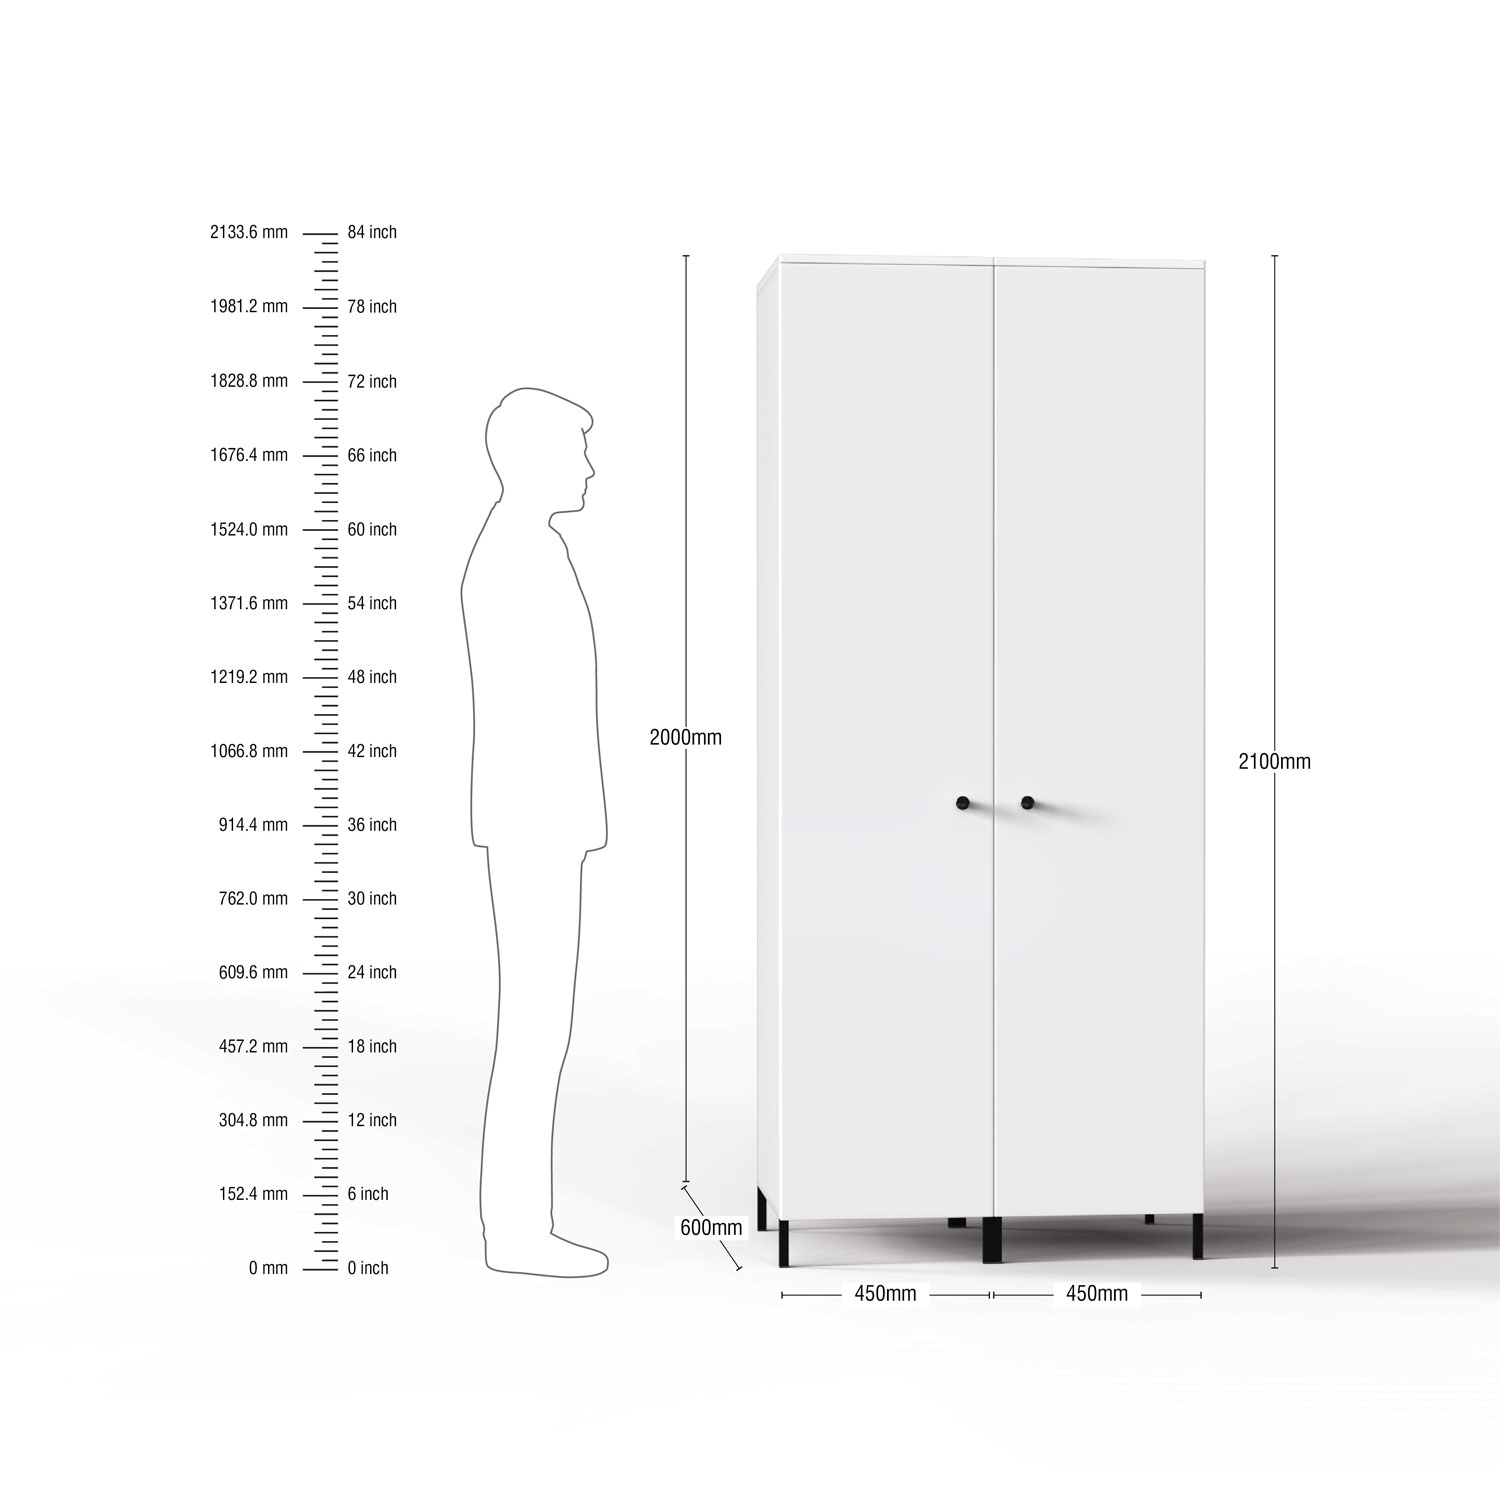 Lambent 2 Door Wardrobe in White and Walnut Finish – DWRD001 C67